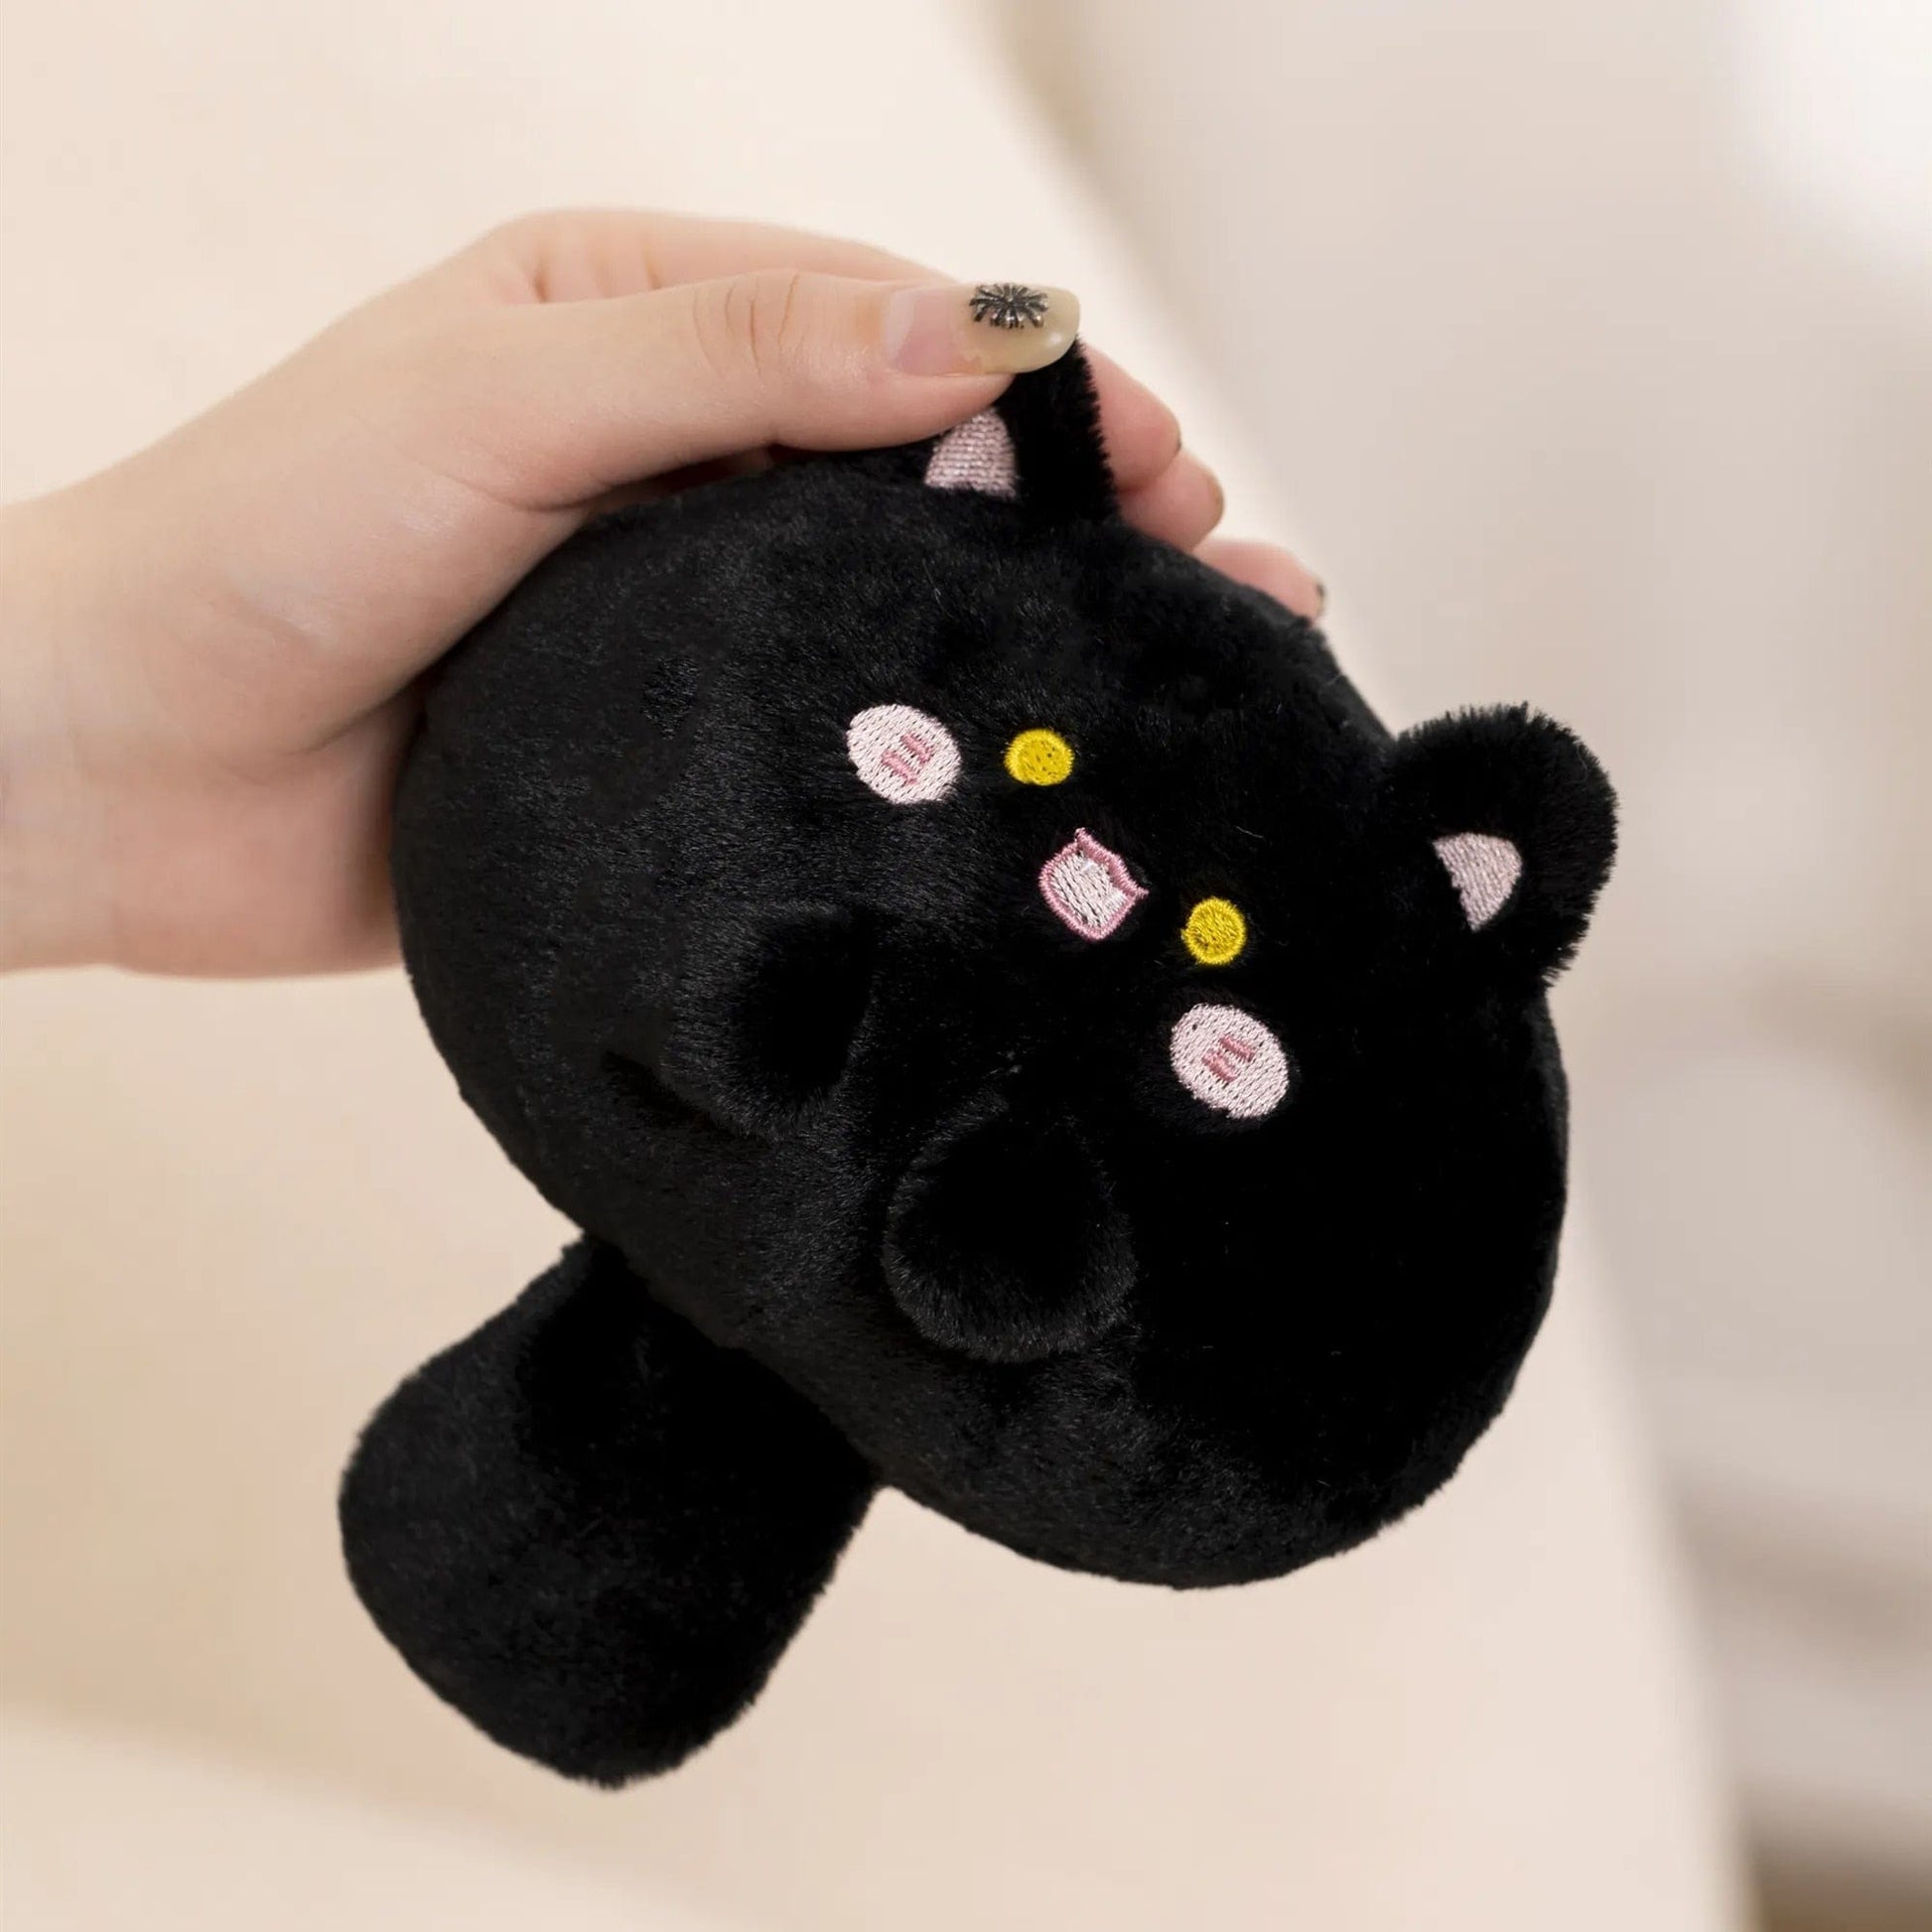 Buy cat plush mini doll pillows online